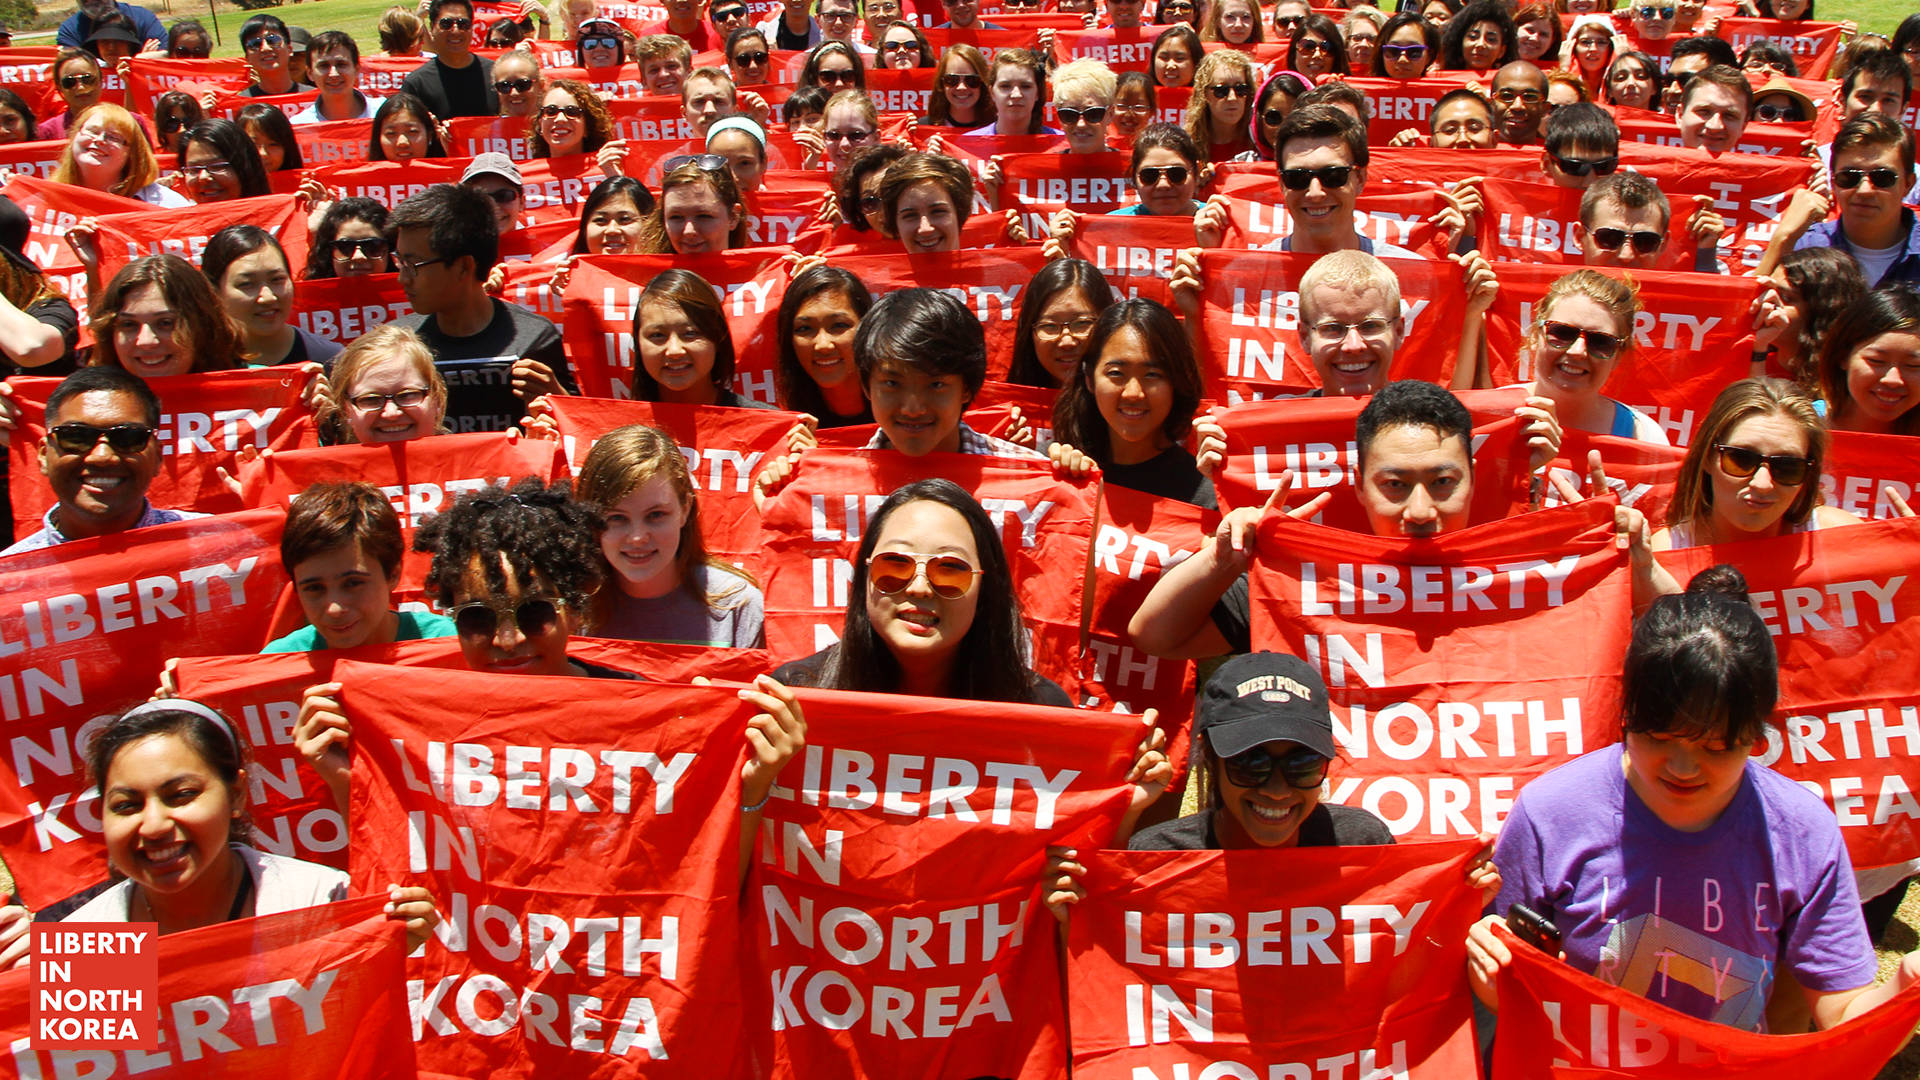 Liberty In North Korea Protesters